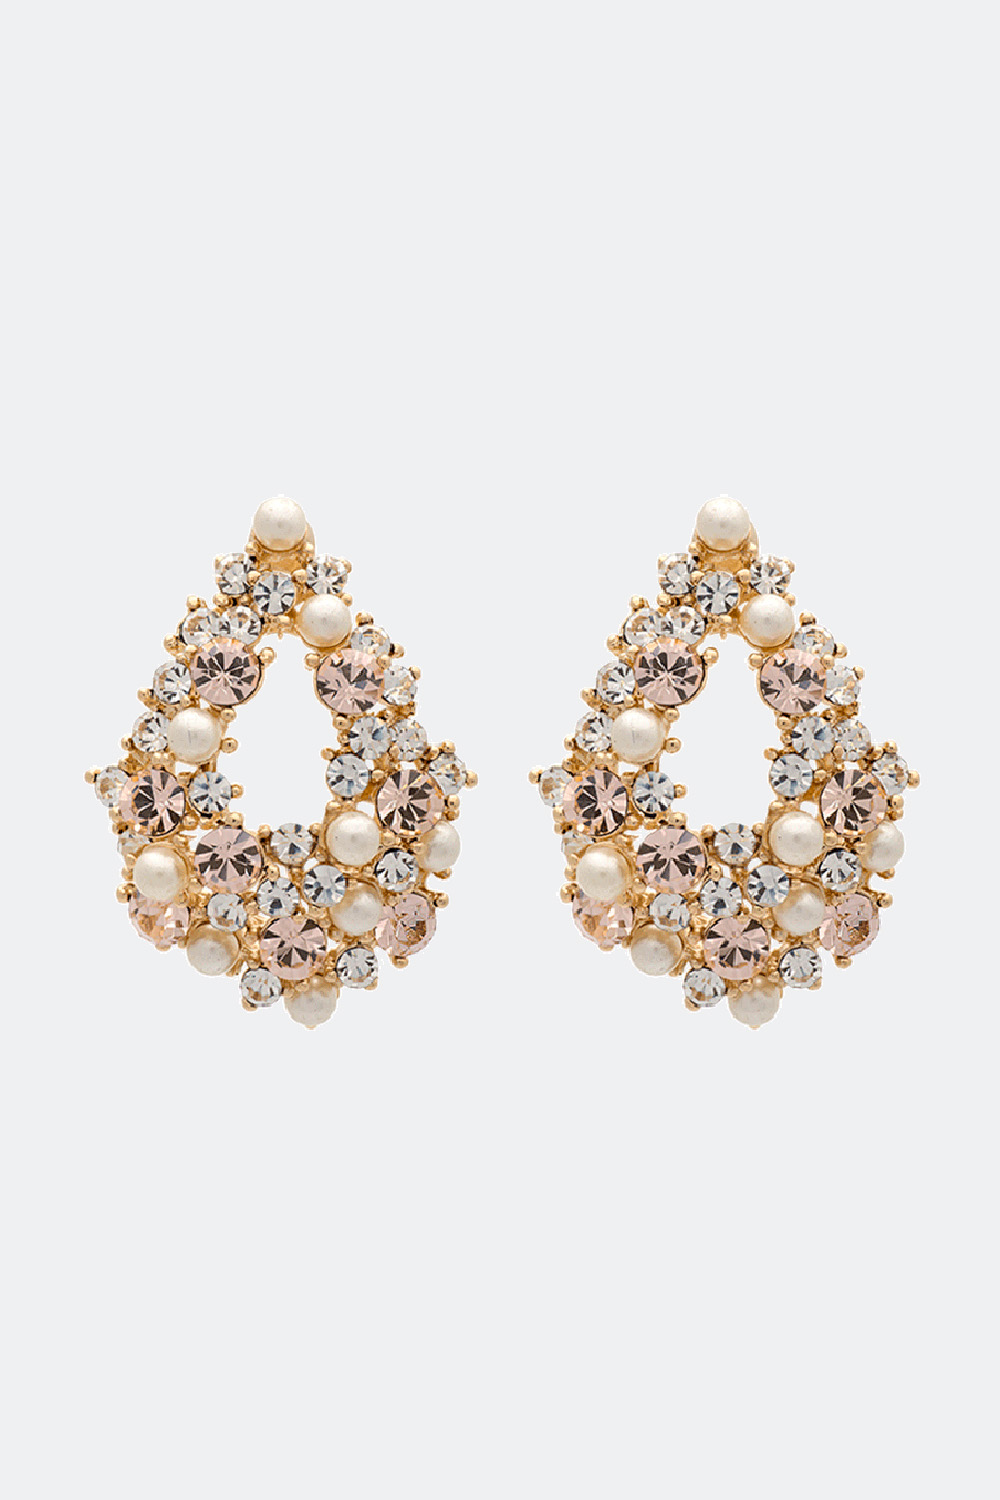 Alice pearl earrings - Ivory silk ryhmässä Lily and Rose - Korvakorut @ Glitter (253000203402)